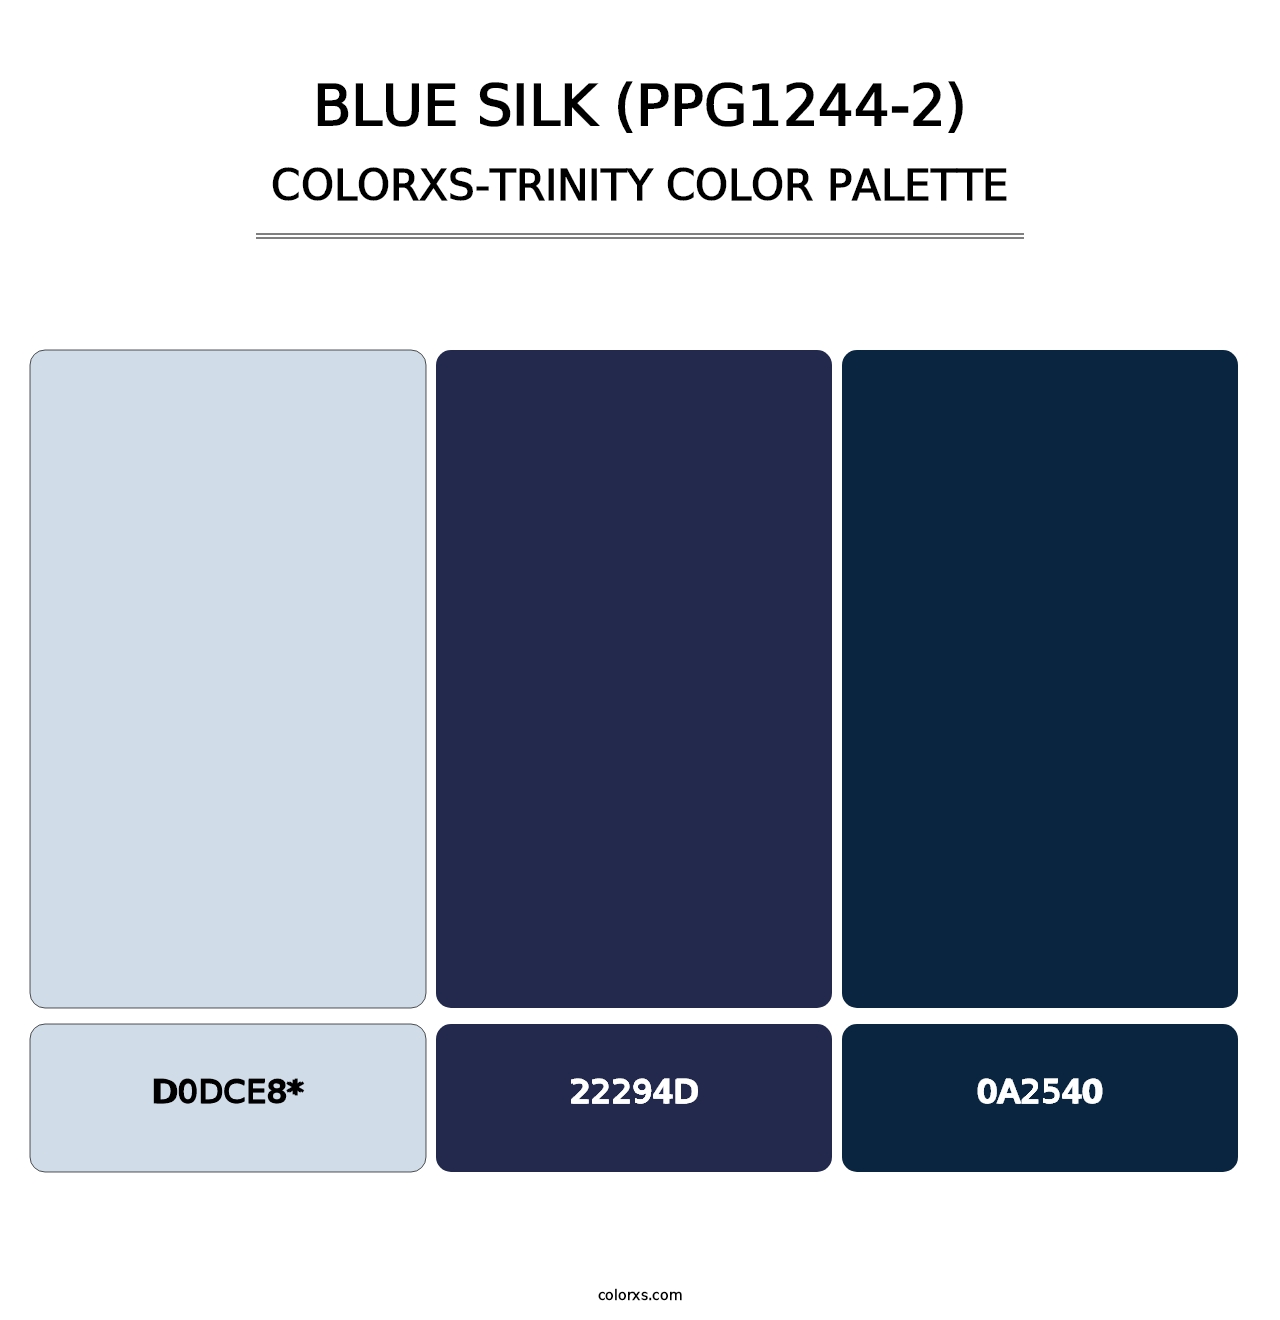 Blue Silk (PPG1244-2) - Colorxs Trinity Palette